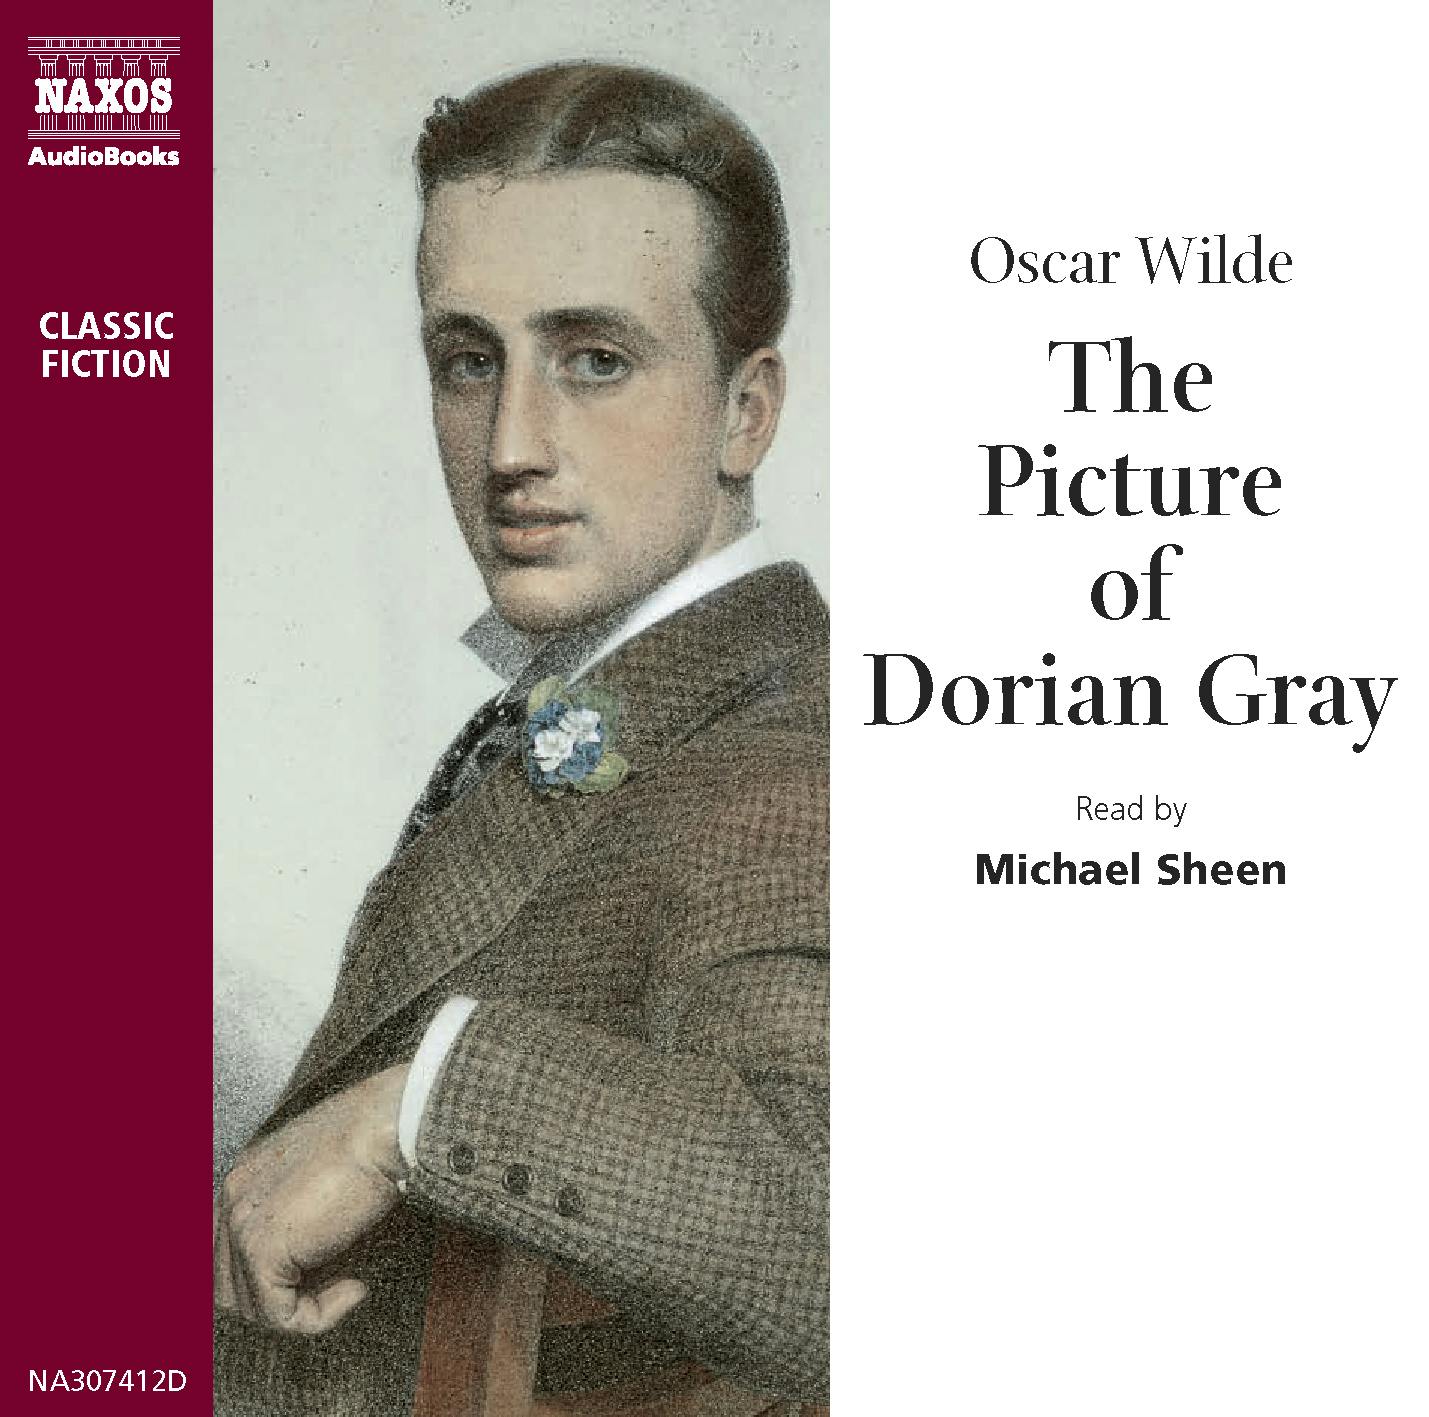 Picture of Dorian Gray, The - Oscar Wilde, Michael Sheen